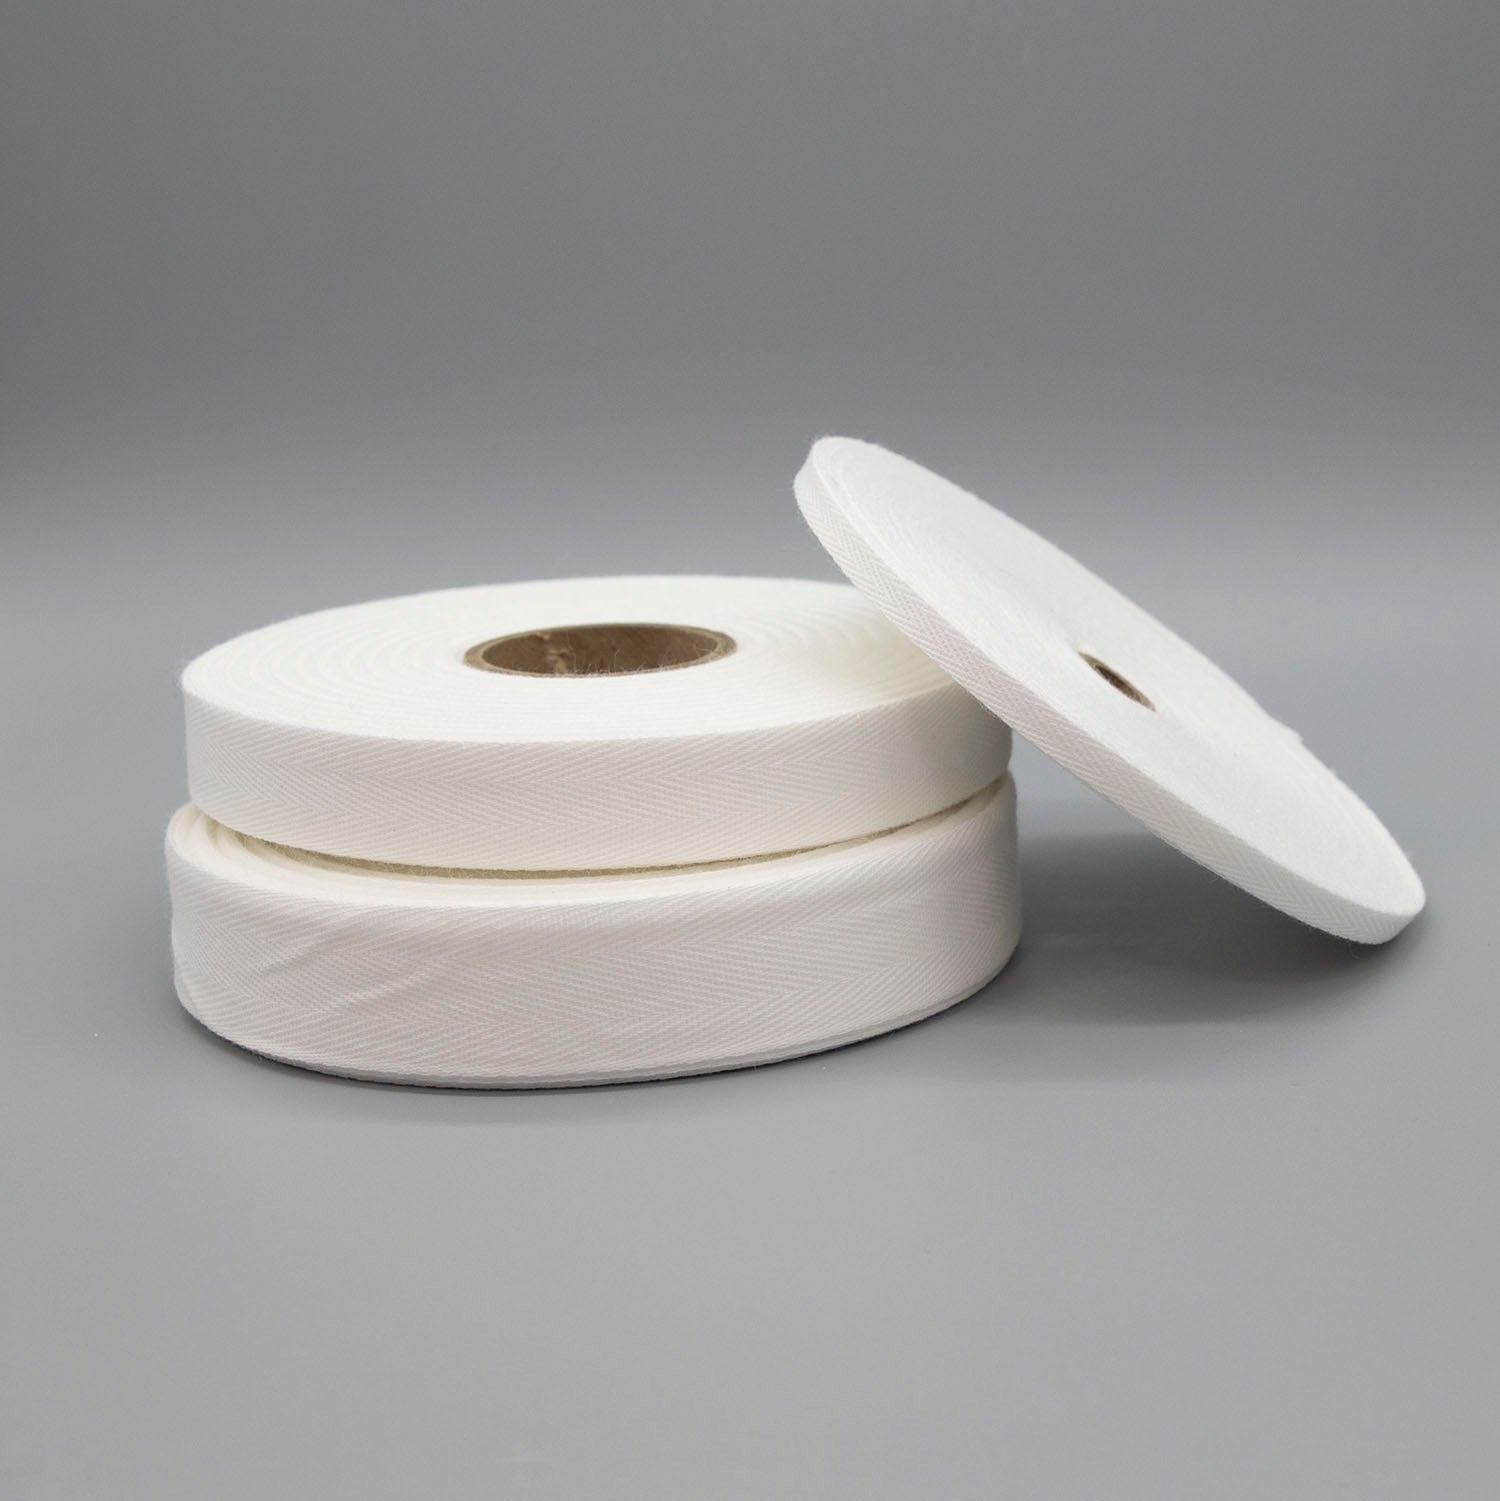 Cotton Twill Tape - 36 yd. roll - SAVE 20% - $7.20 - $12.96 - Burnley & Trowbridge Co.